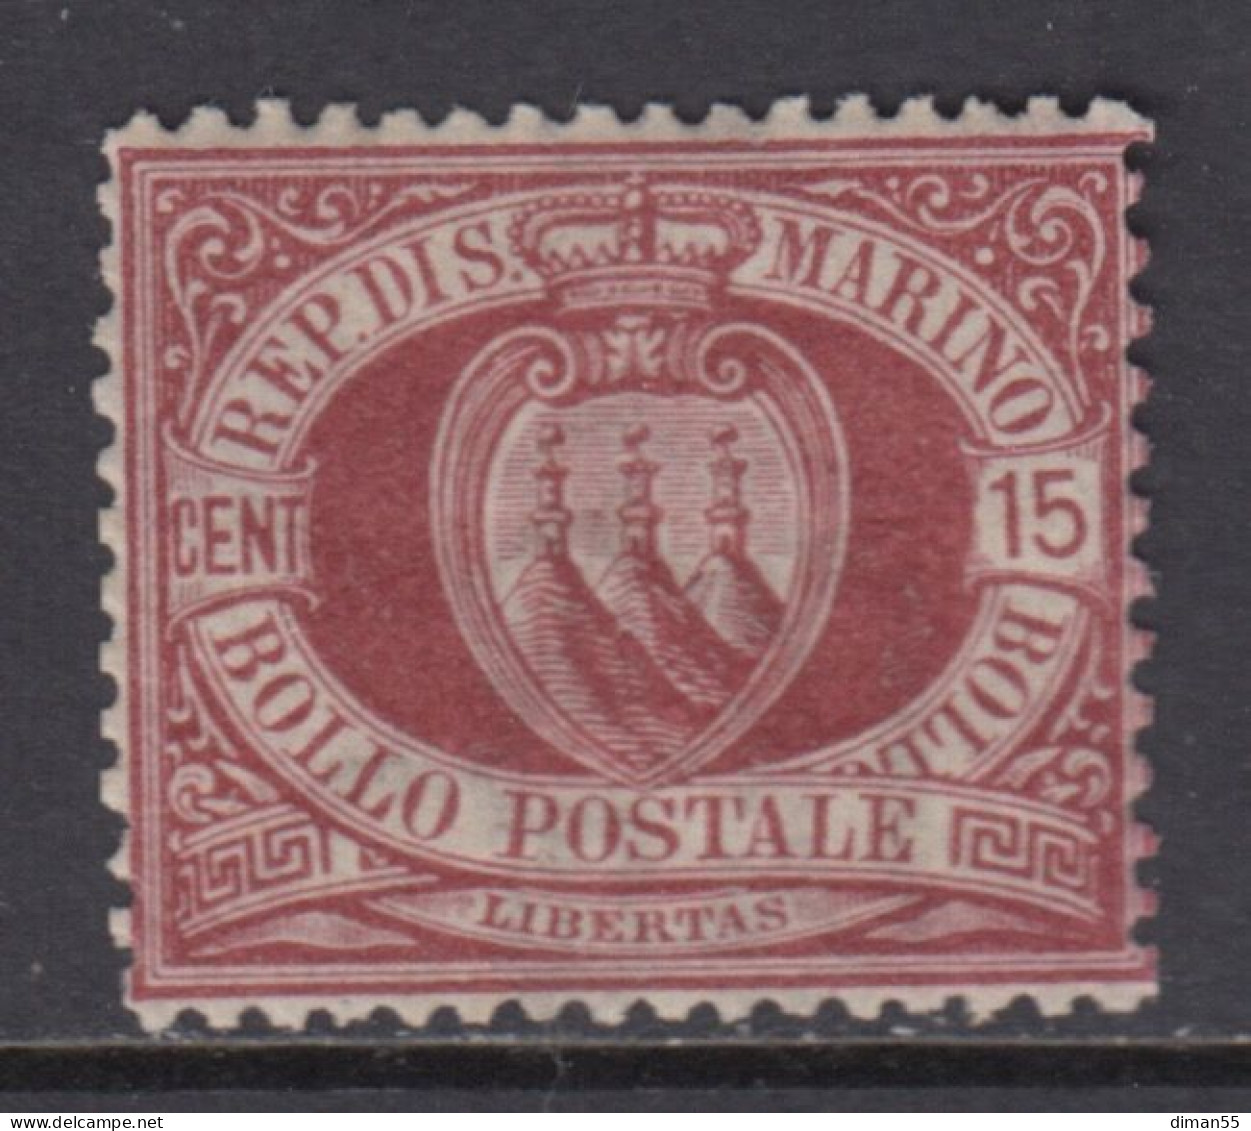 SAN MARINO - Sassone N.15 -  Cv 2750 Euro - CENTRATISSIMO - FIRMATO RAYBAUDI - MNH**  Gomma Integra - Unused Stamps